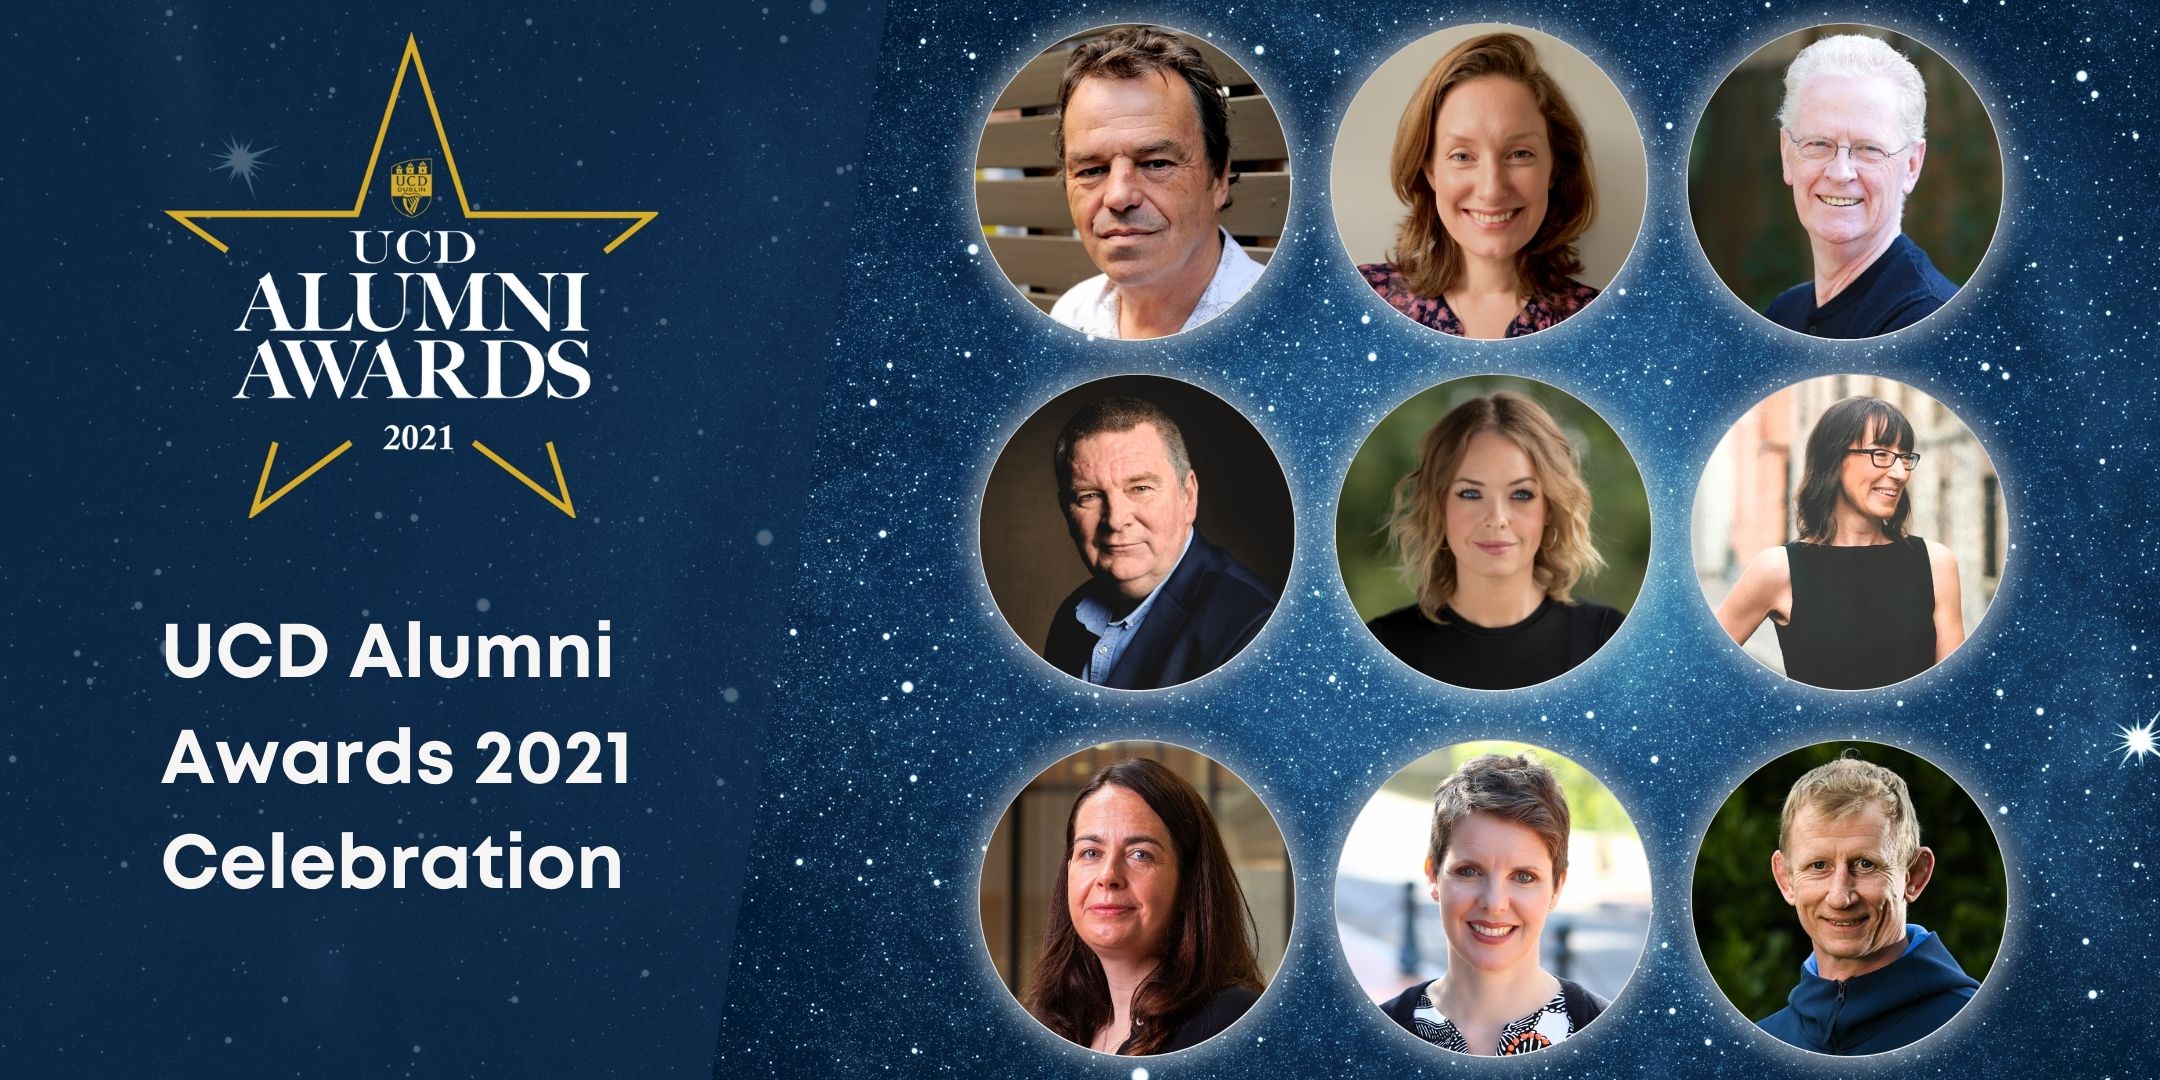 The nine winners of the UCD Alumni Awards in 2021